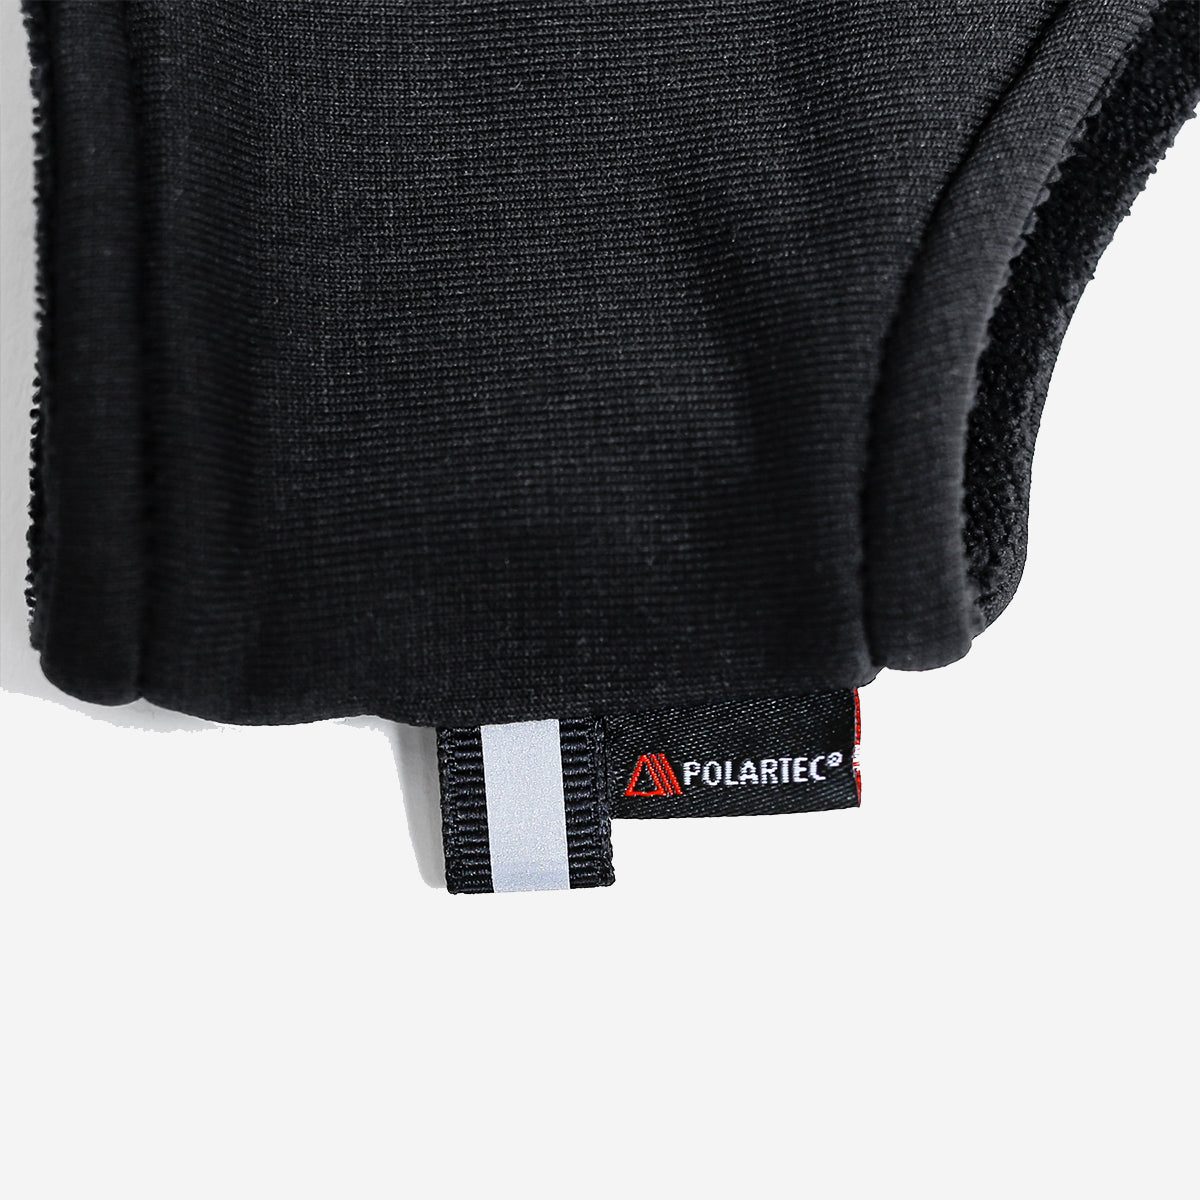 Polartec Fleece Powergrid Warm Headband - Black